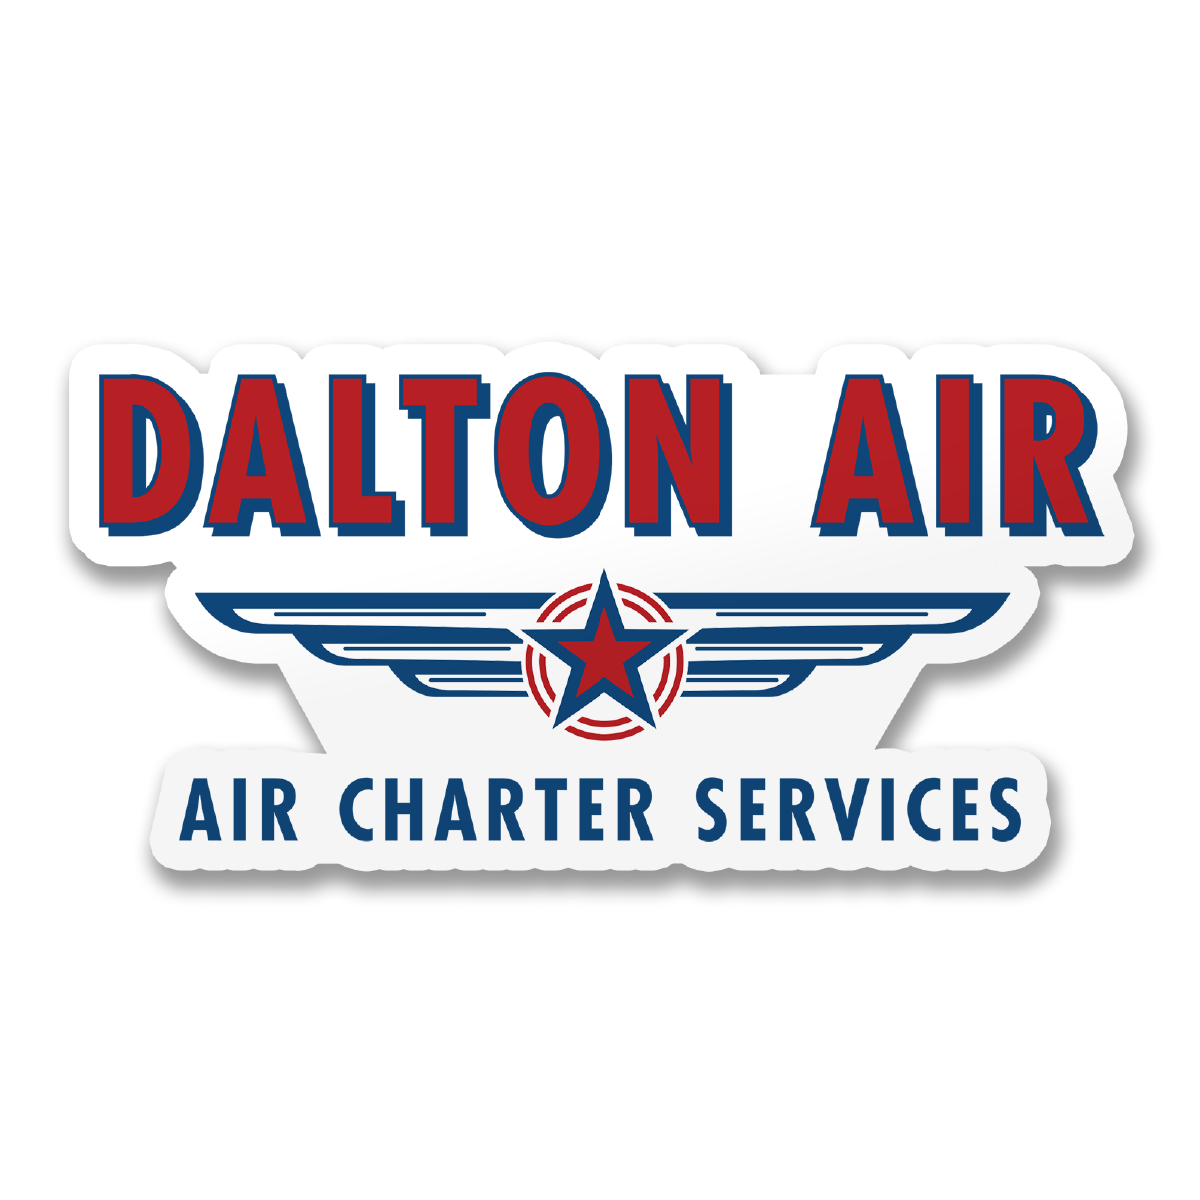 Dalton Air Charter Services Sticker